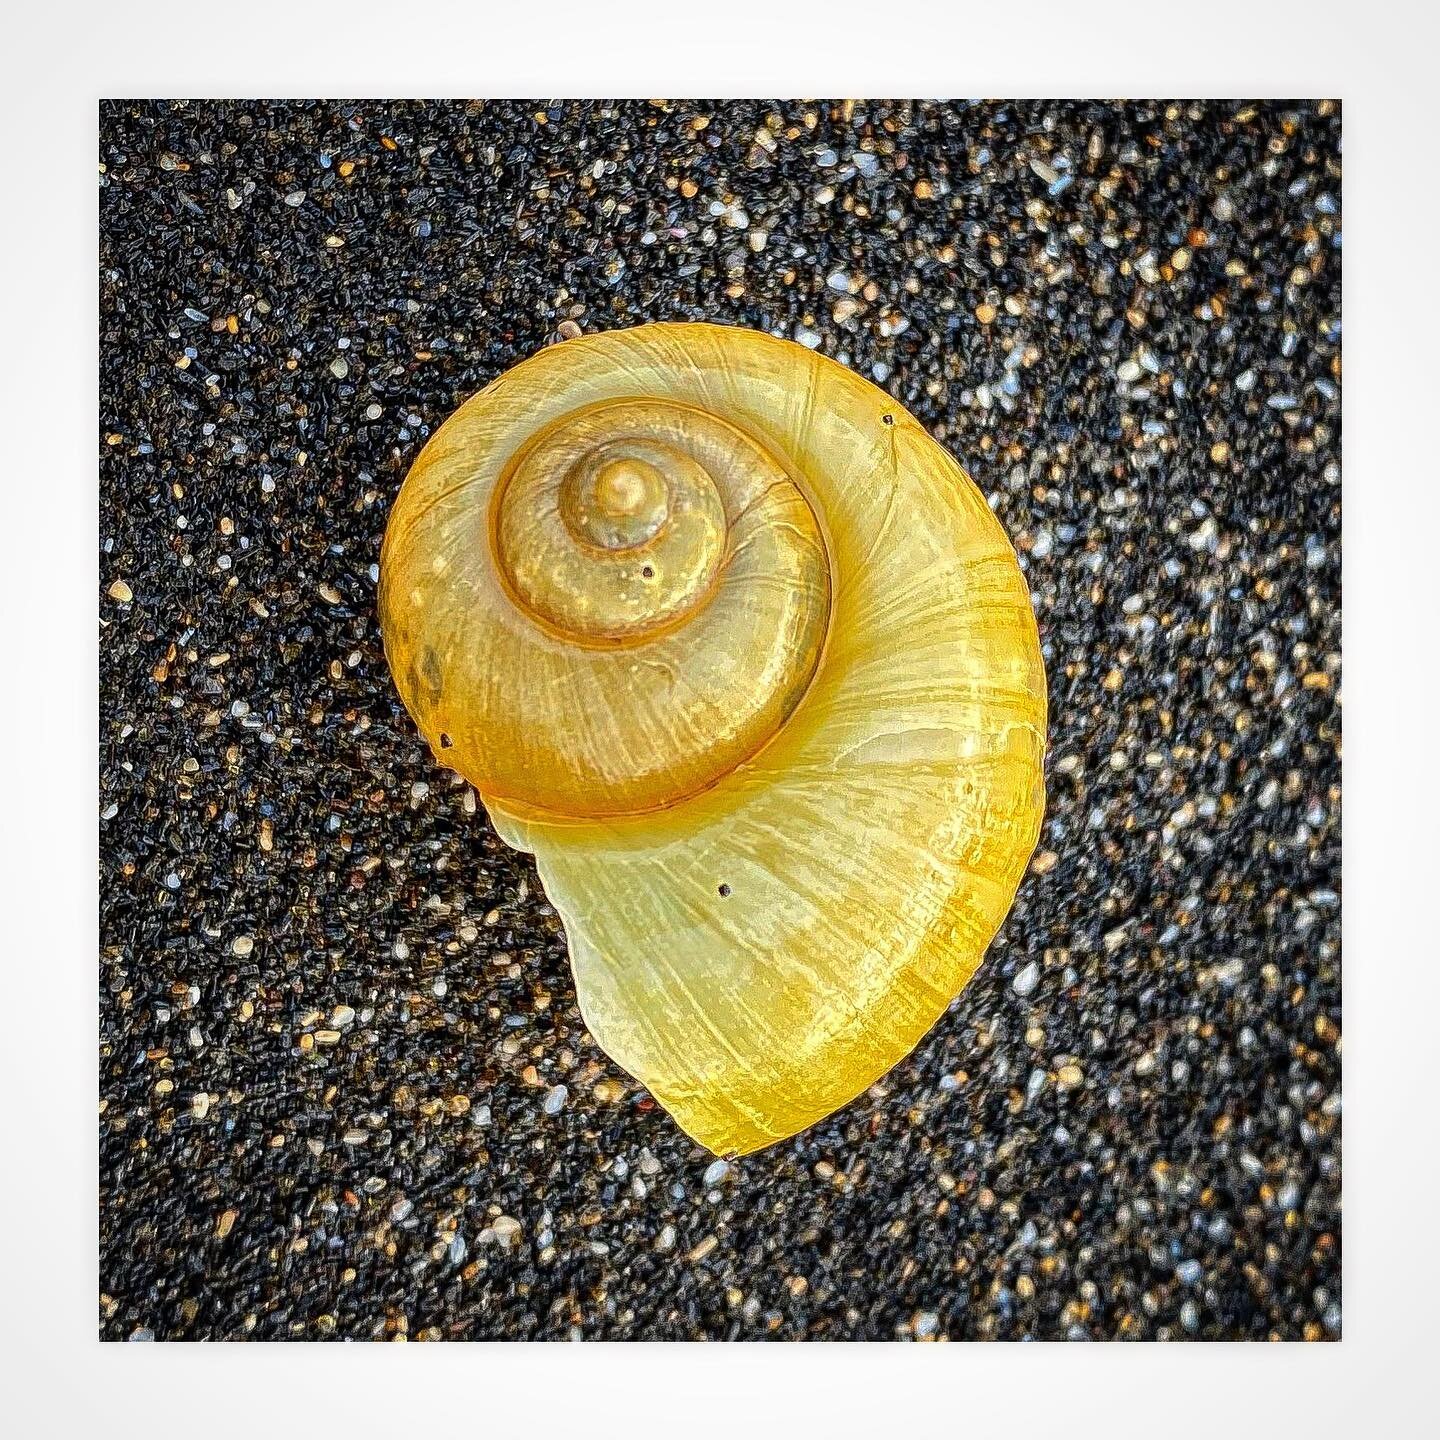 #seashell #beach #ocean #bali #indonesia #33trekking #livelaughlove #travel #adventure #backpacking #explore #photography #travelphotography #blog #nomadic #liveauthentic #worldtravel #artofvisuals #scenic #natgeo  #danajonchappelle #groundhogday #st